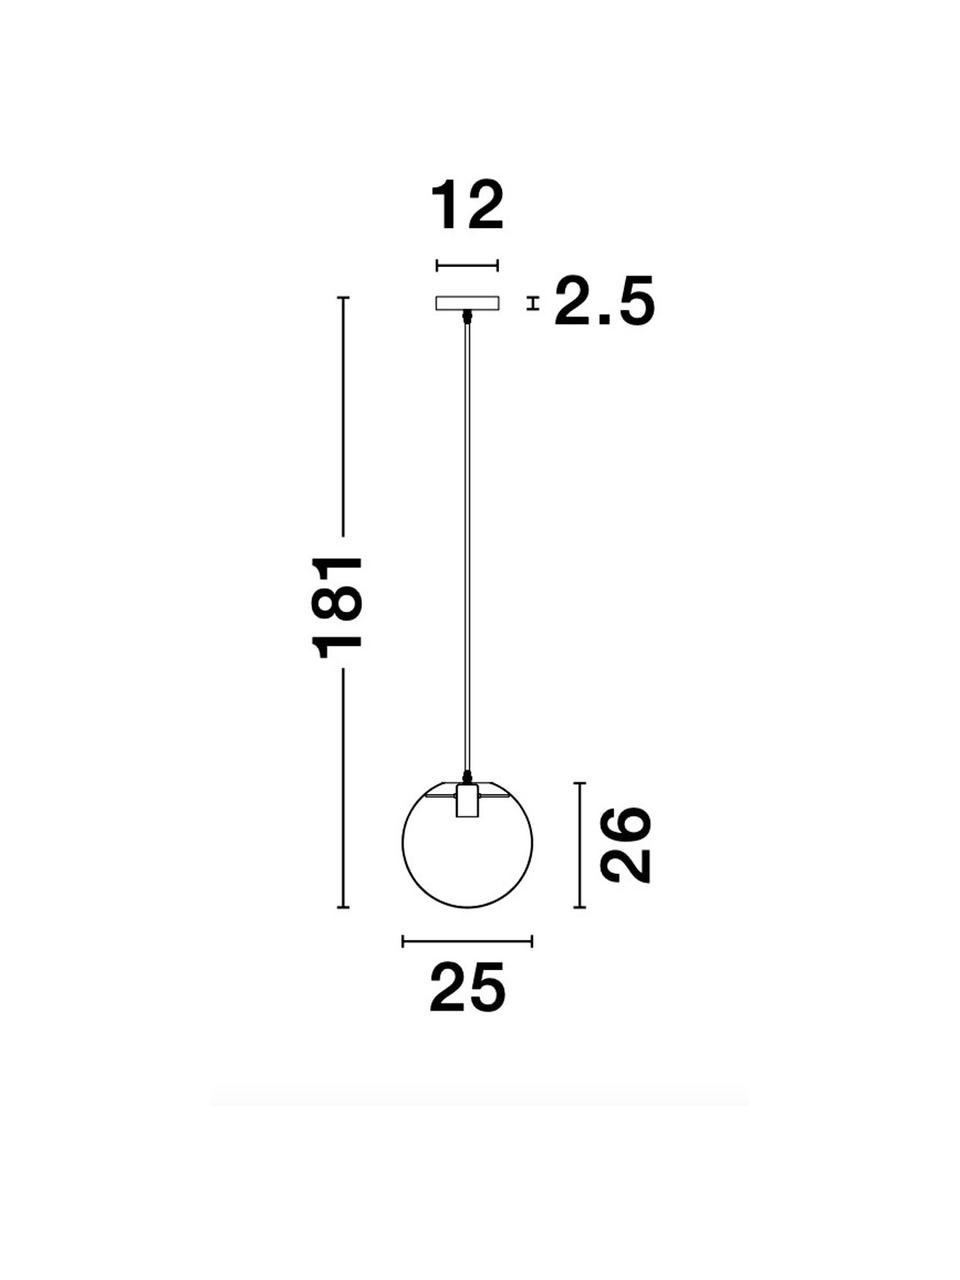 Kleine hanglamp Mirale met glazen lampenkap, Lampenkap: glas, Baldakijn: kunststof, Messingkleurig, transparant, Ø 25  x H 26 cm